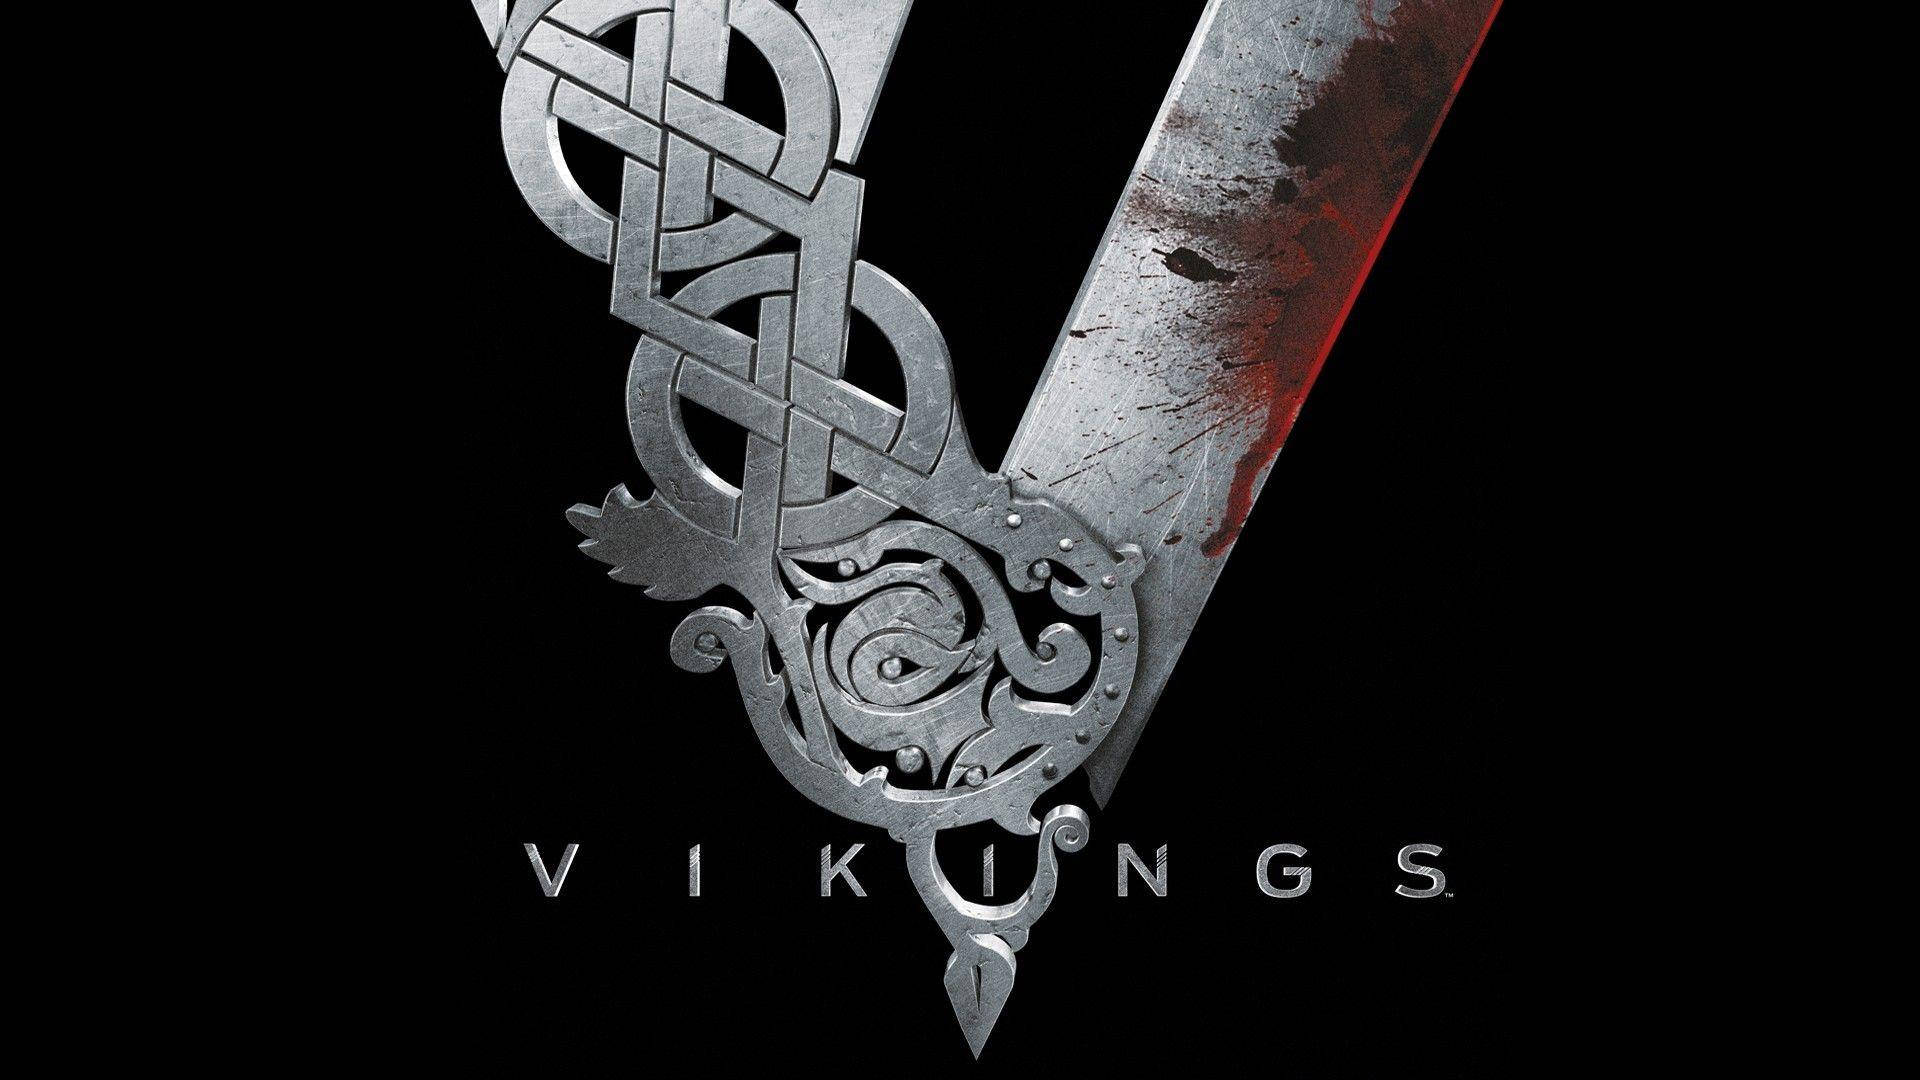 Logode Los Vikings Con Sangre Fondo de pantalla